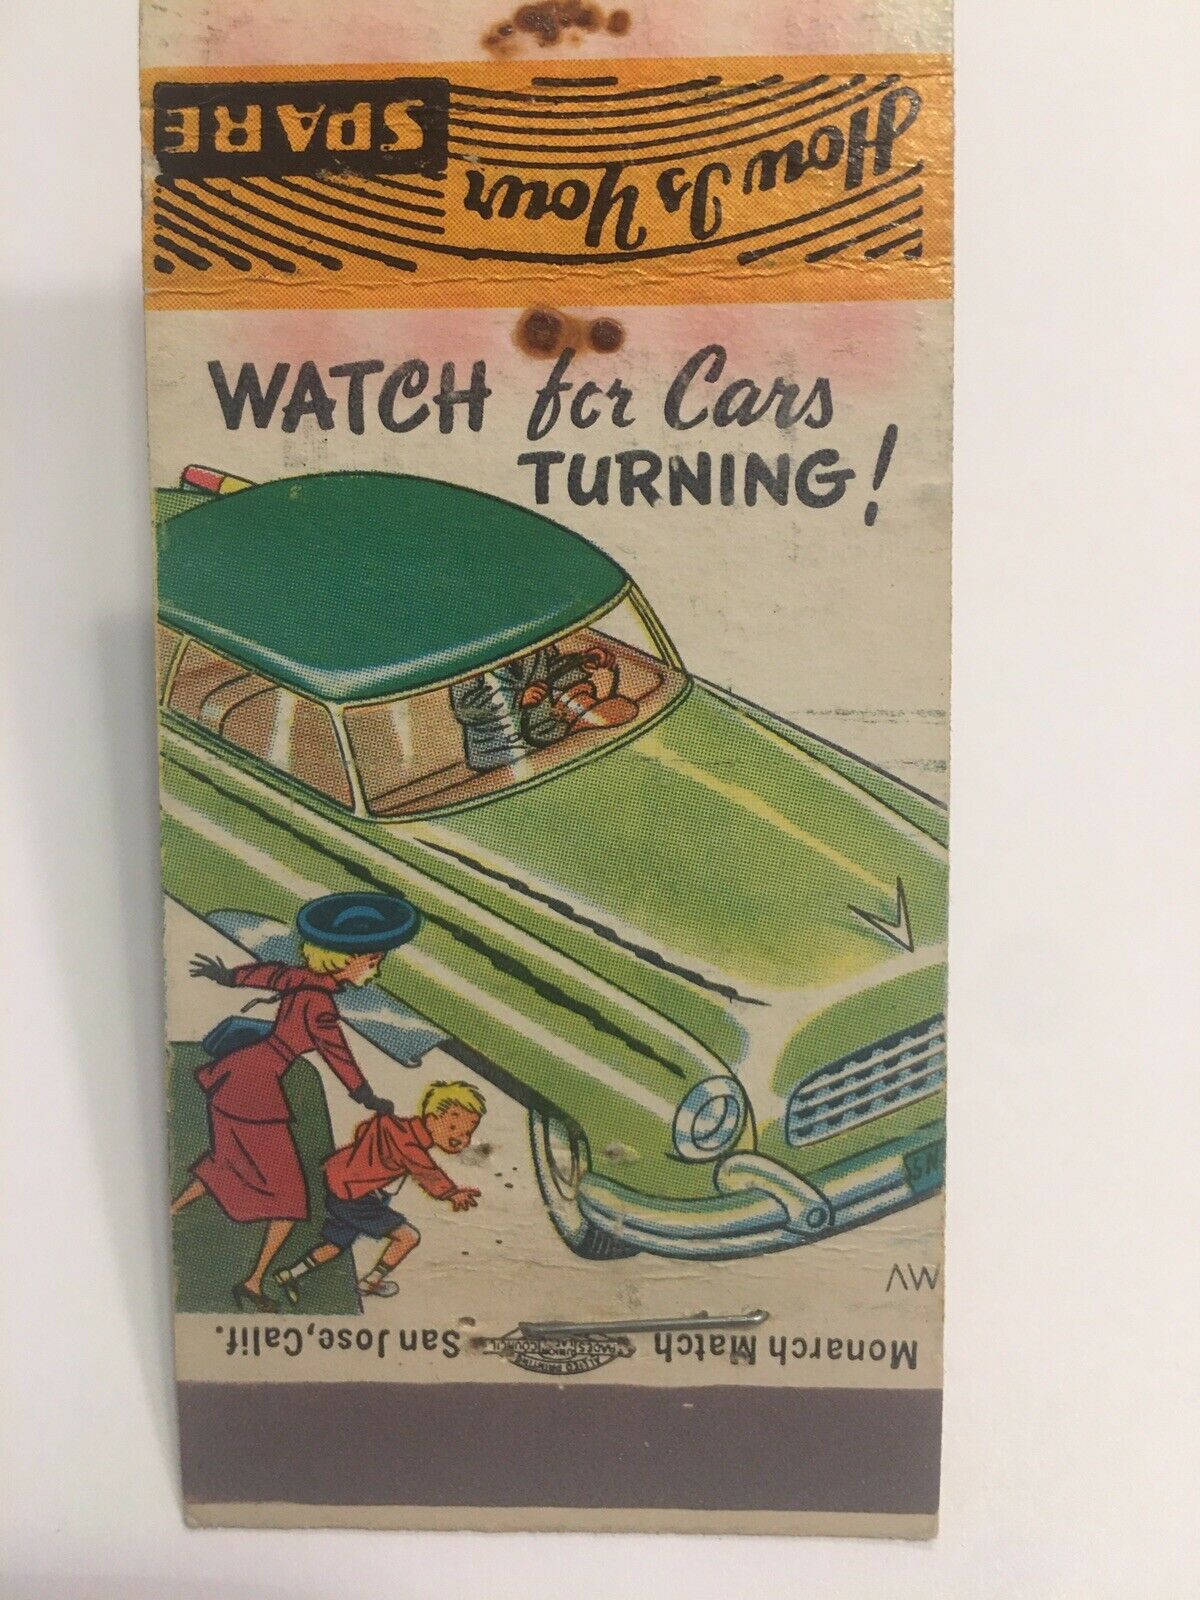 Vintage Utoco Matchbook Cover Chris’s Service Wells, Nevada d646